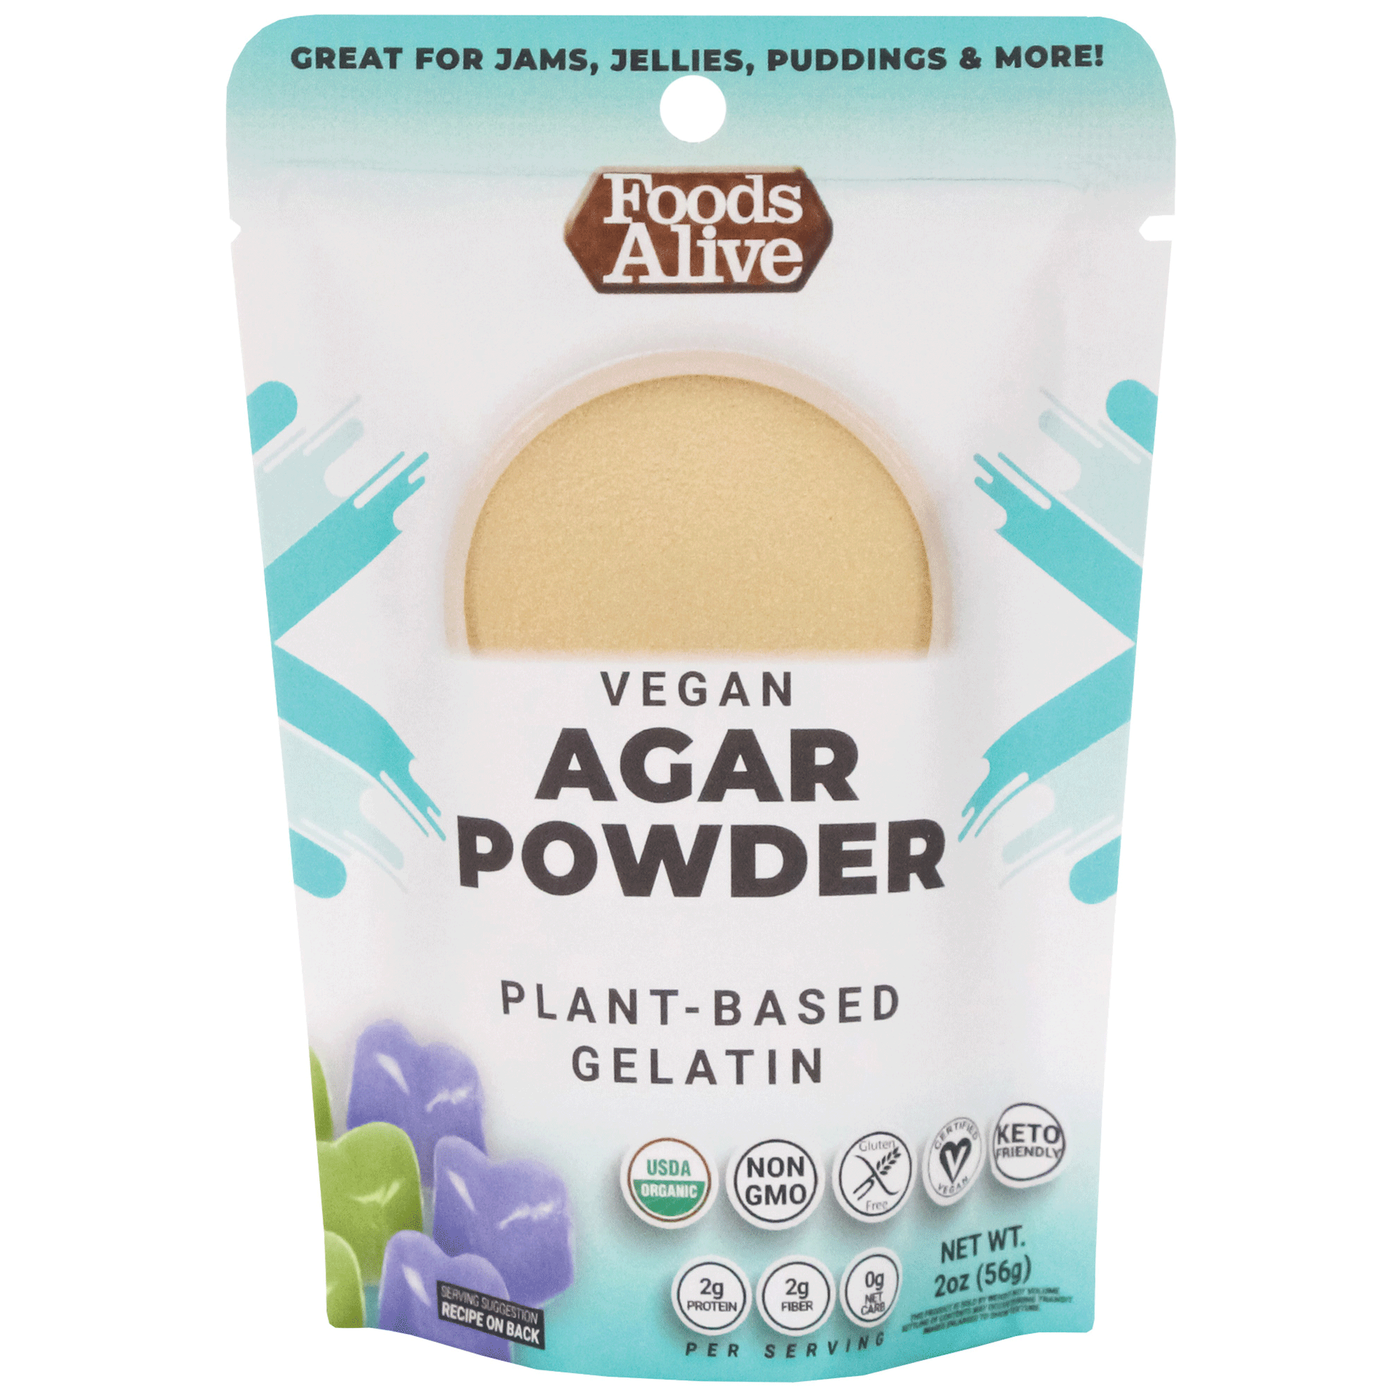 Agar Powder Organic serving 19 Curated Wellness